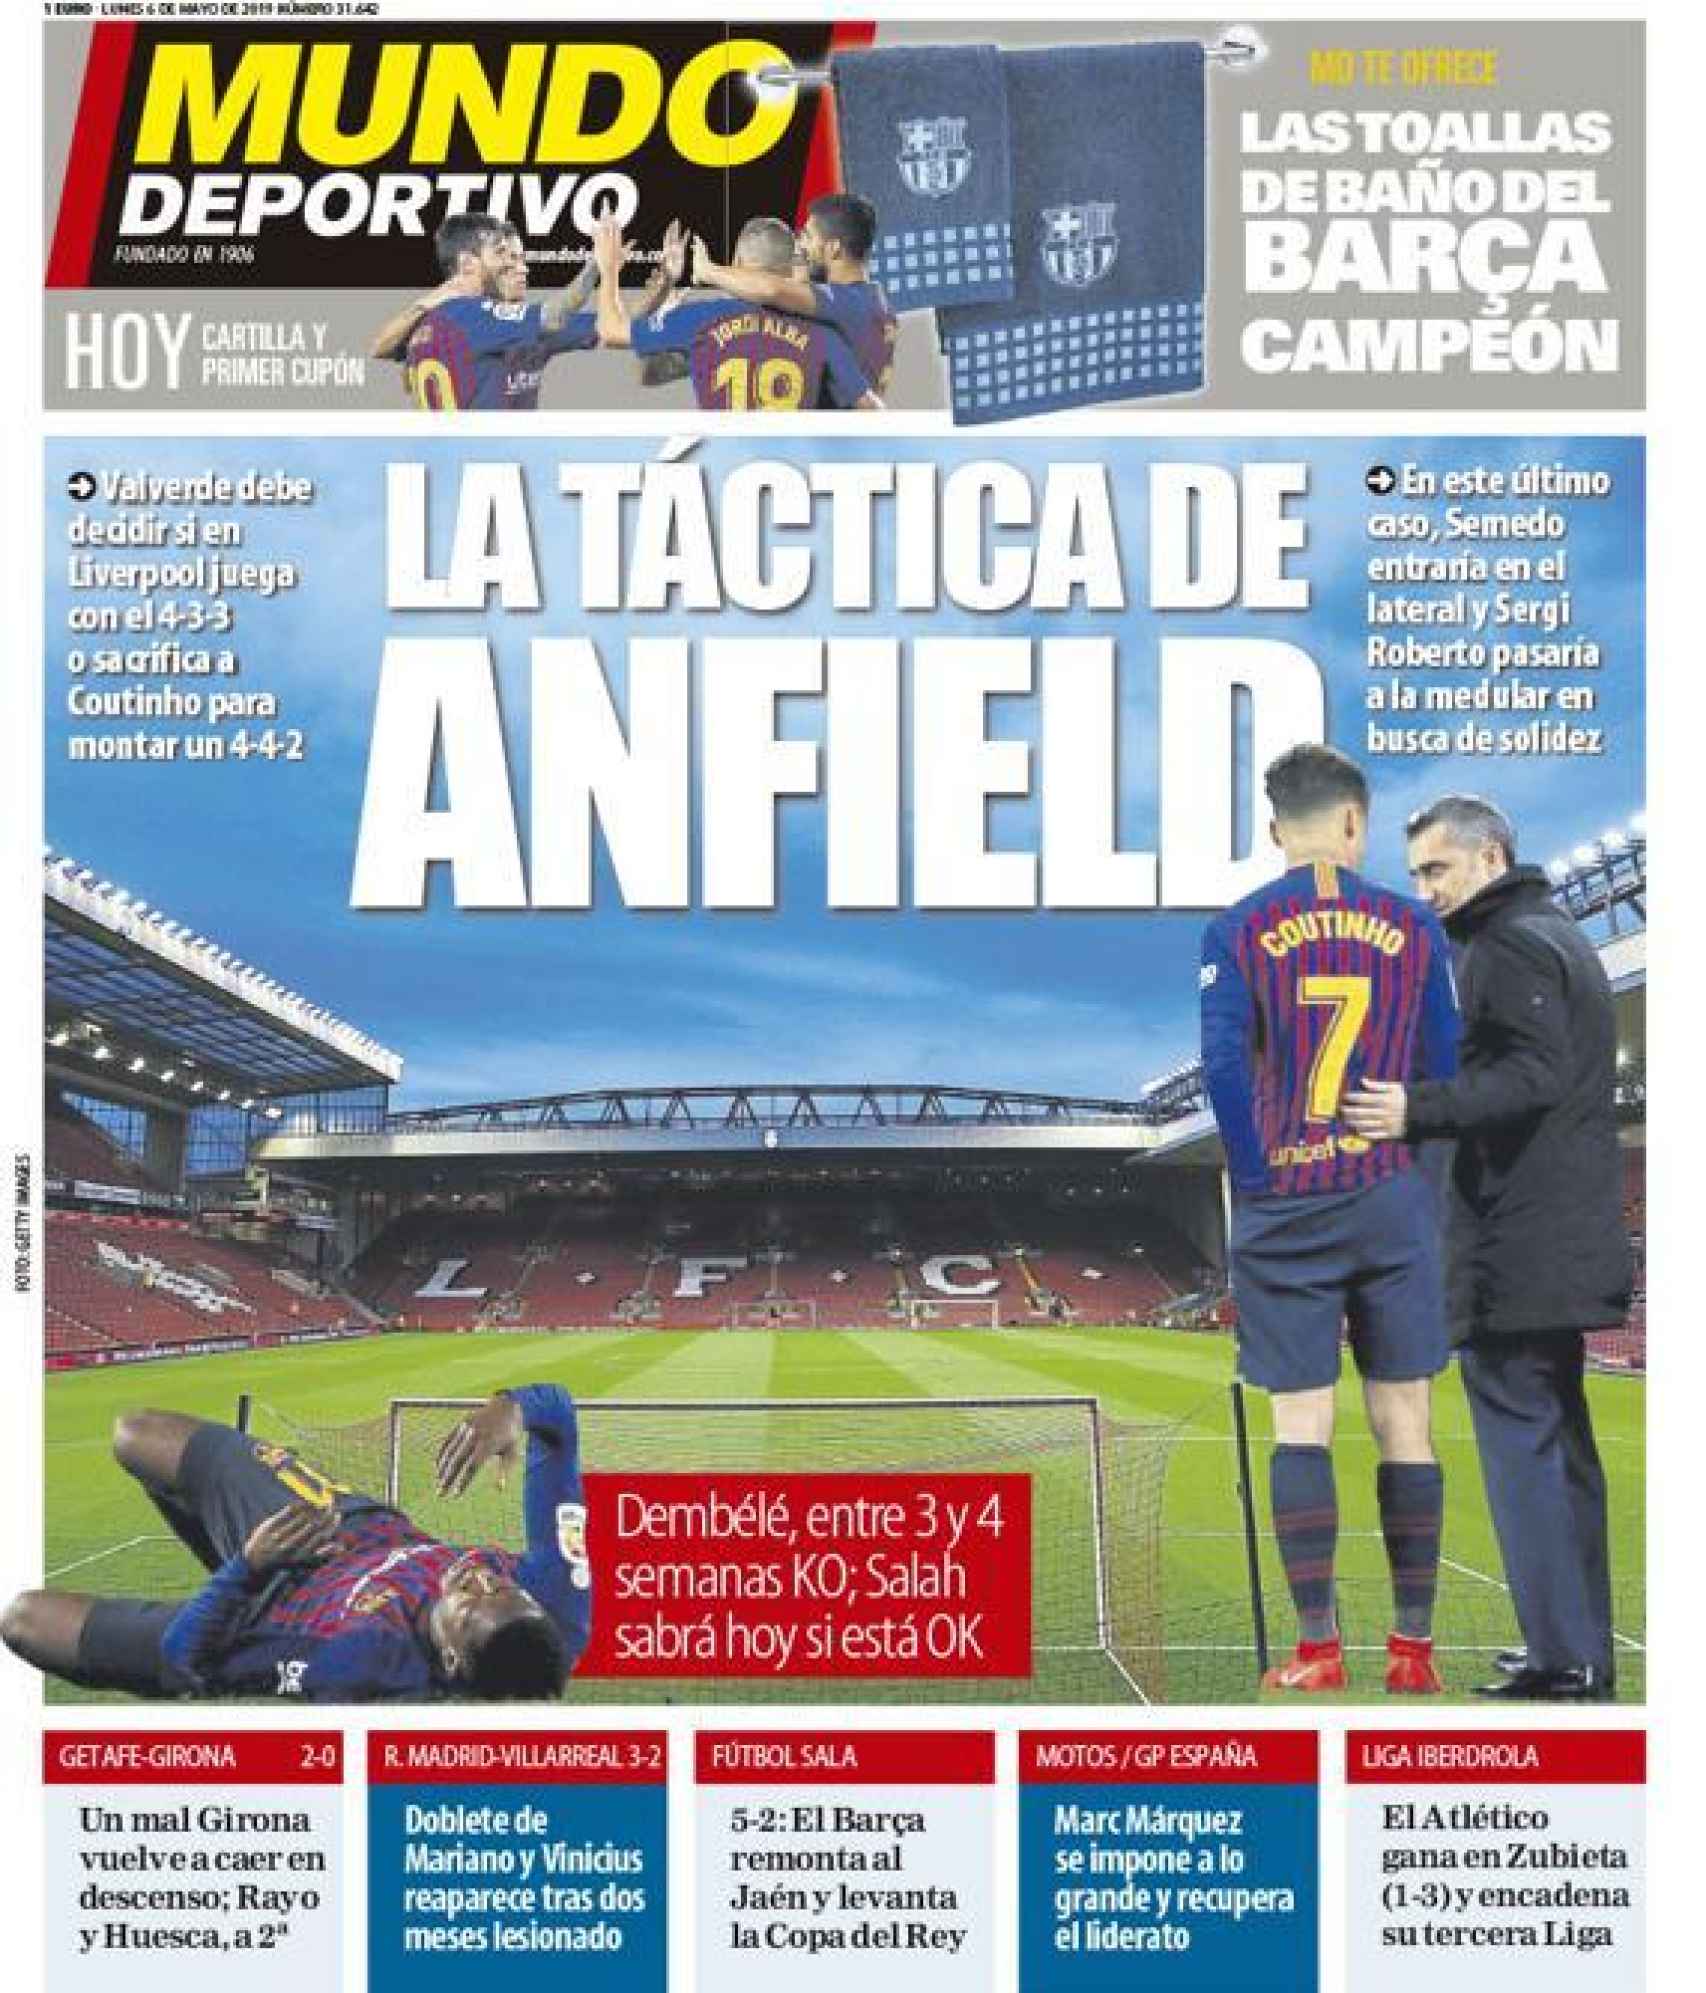 La portada del diario Mundo Deportivo (06/05/2019)1706 x 1992